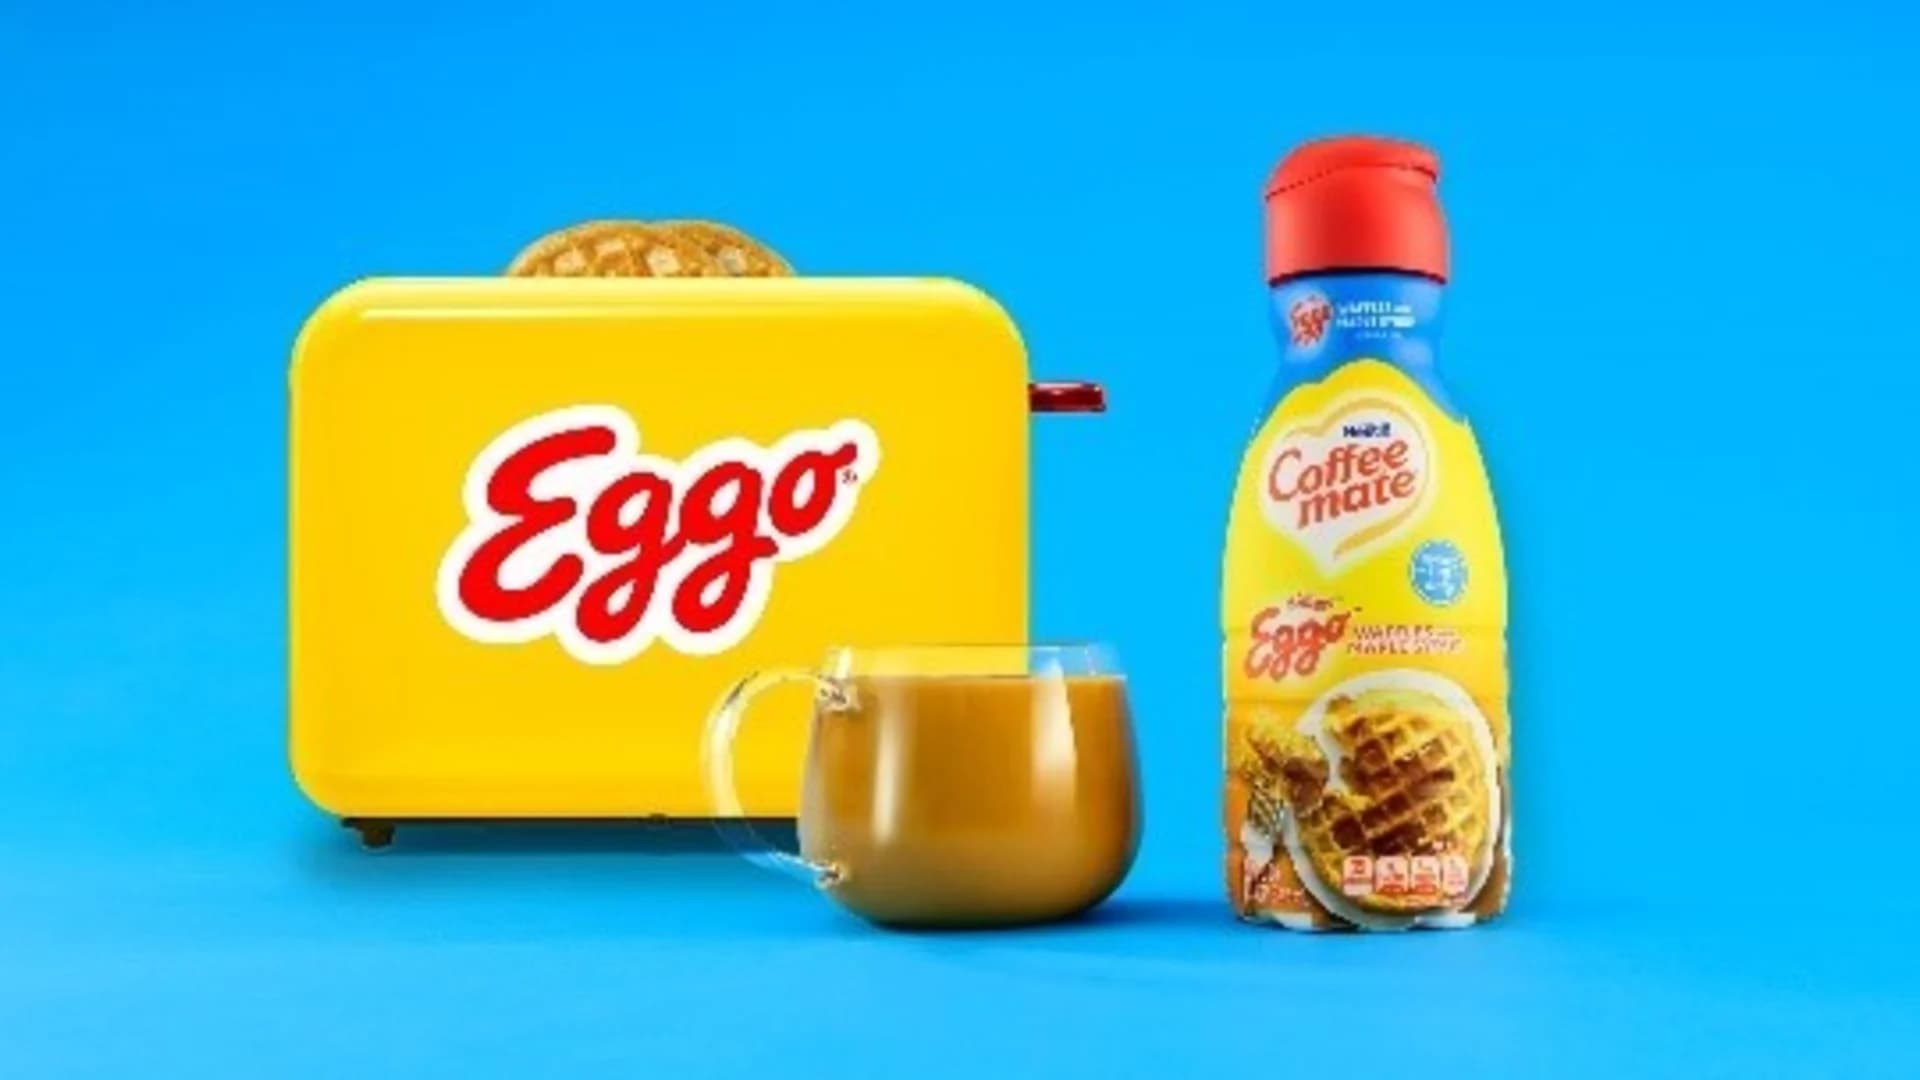 Coffee mate and Eggo partner to launch breakfast-inspired coffee creamer